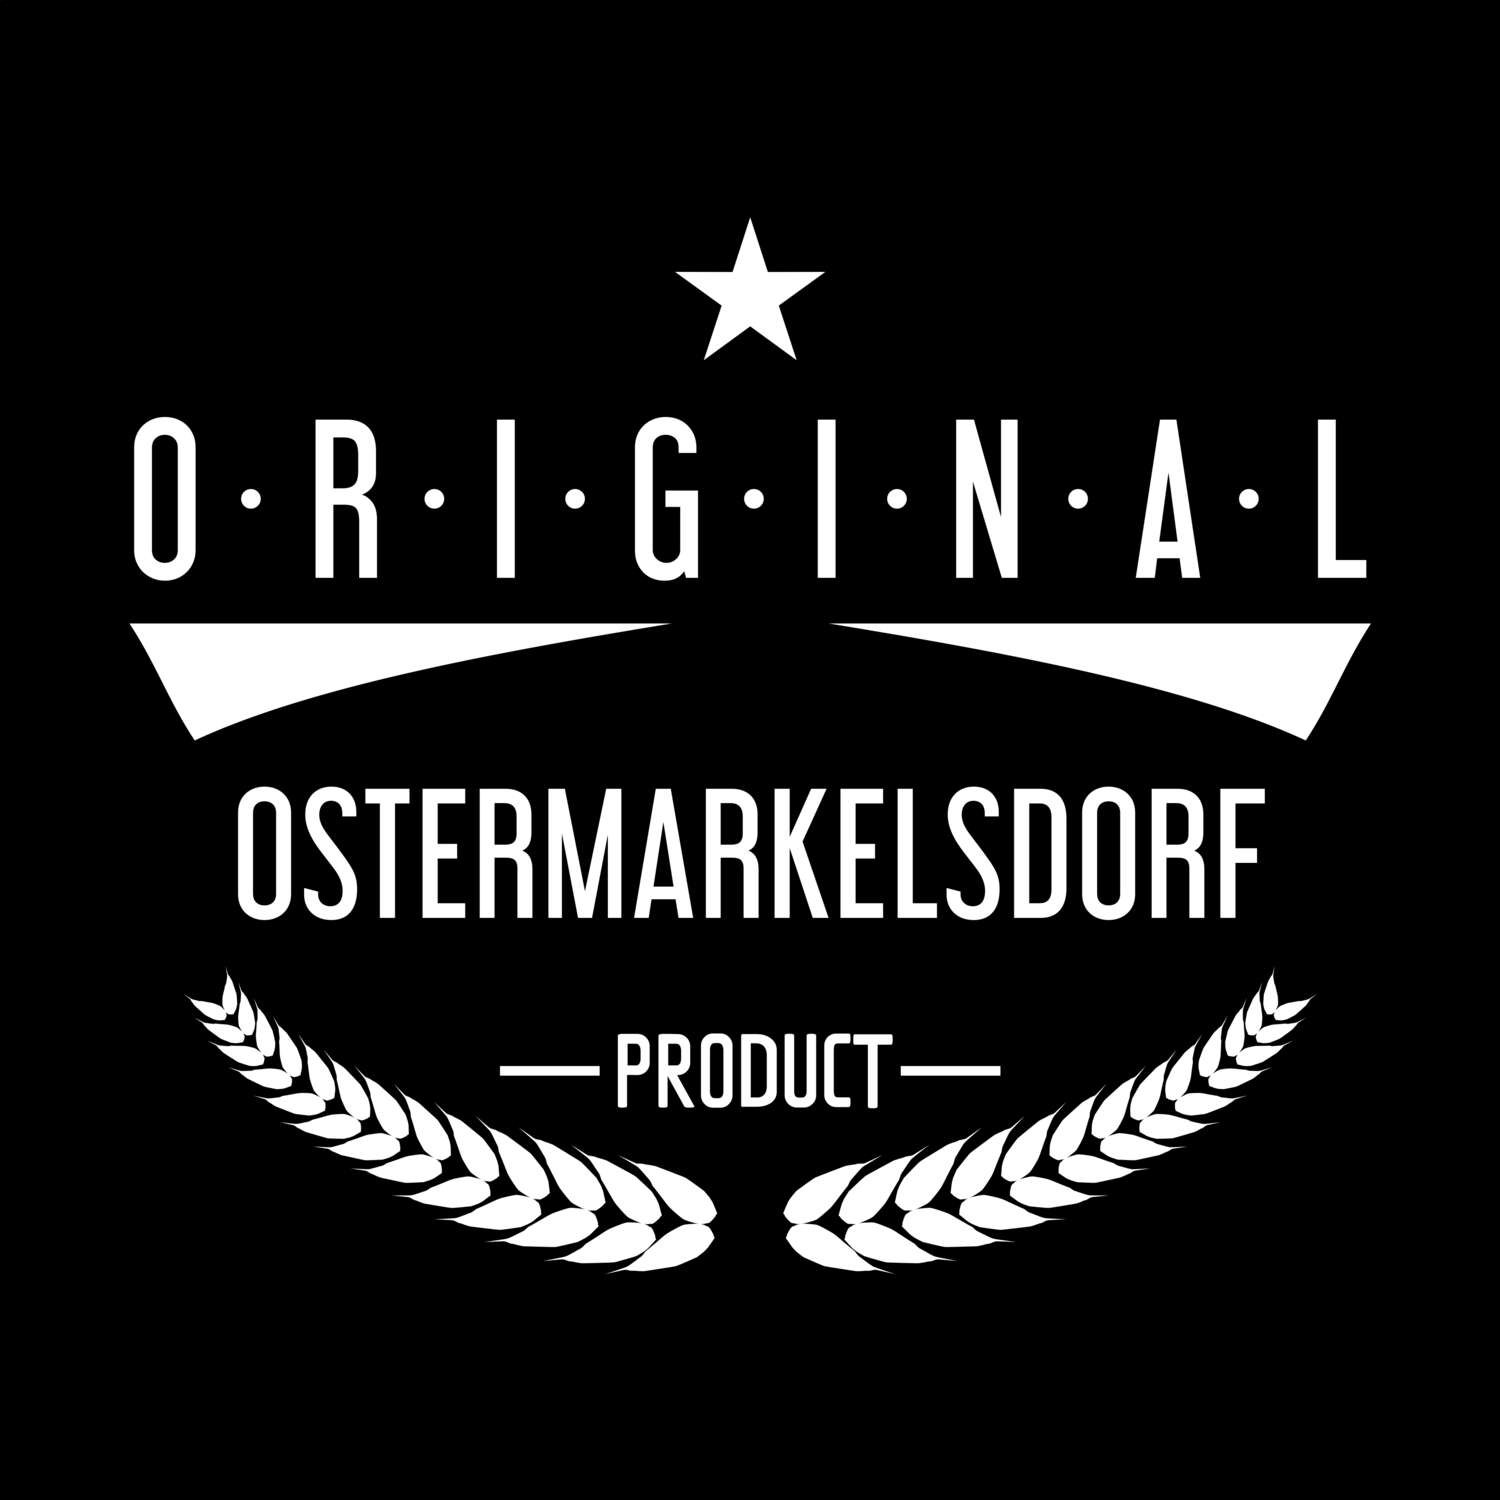 Ostermarkelsdorf T-Shirt »Original Product«